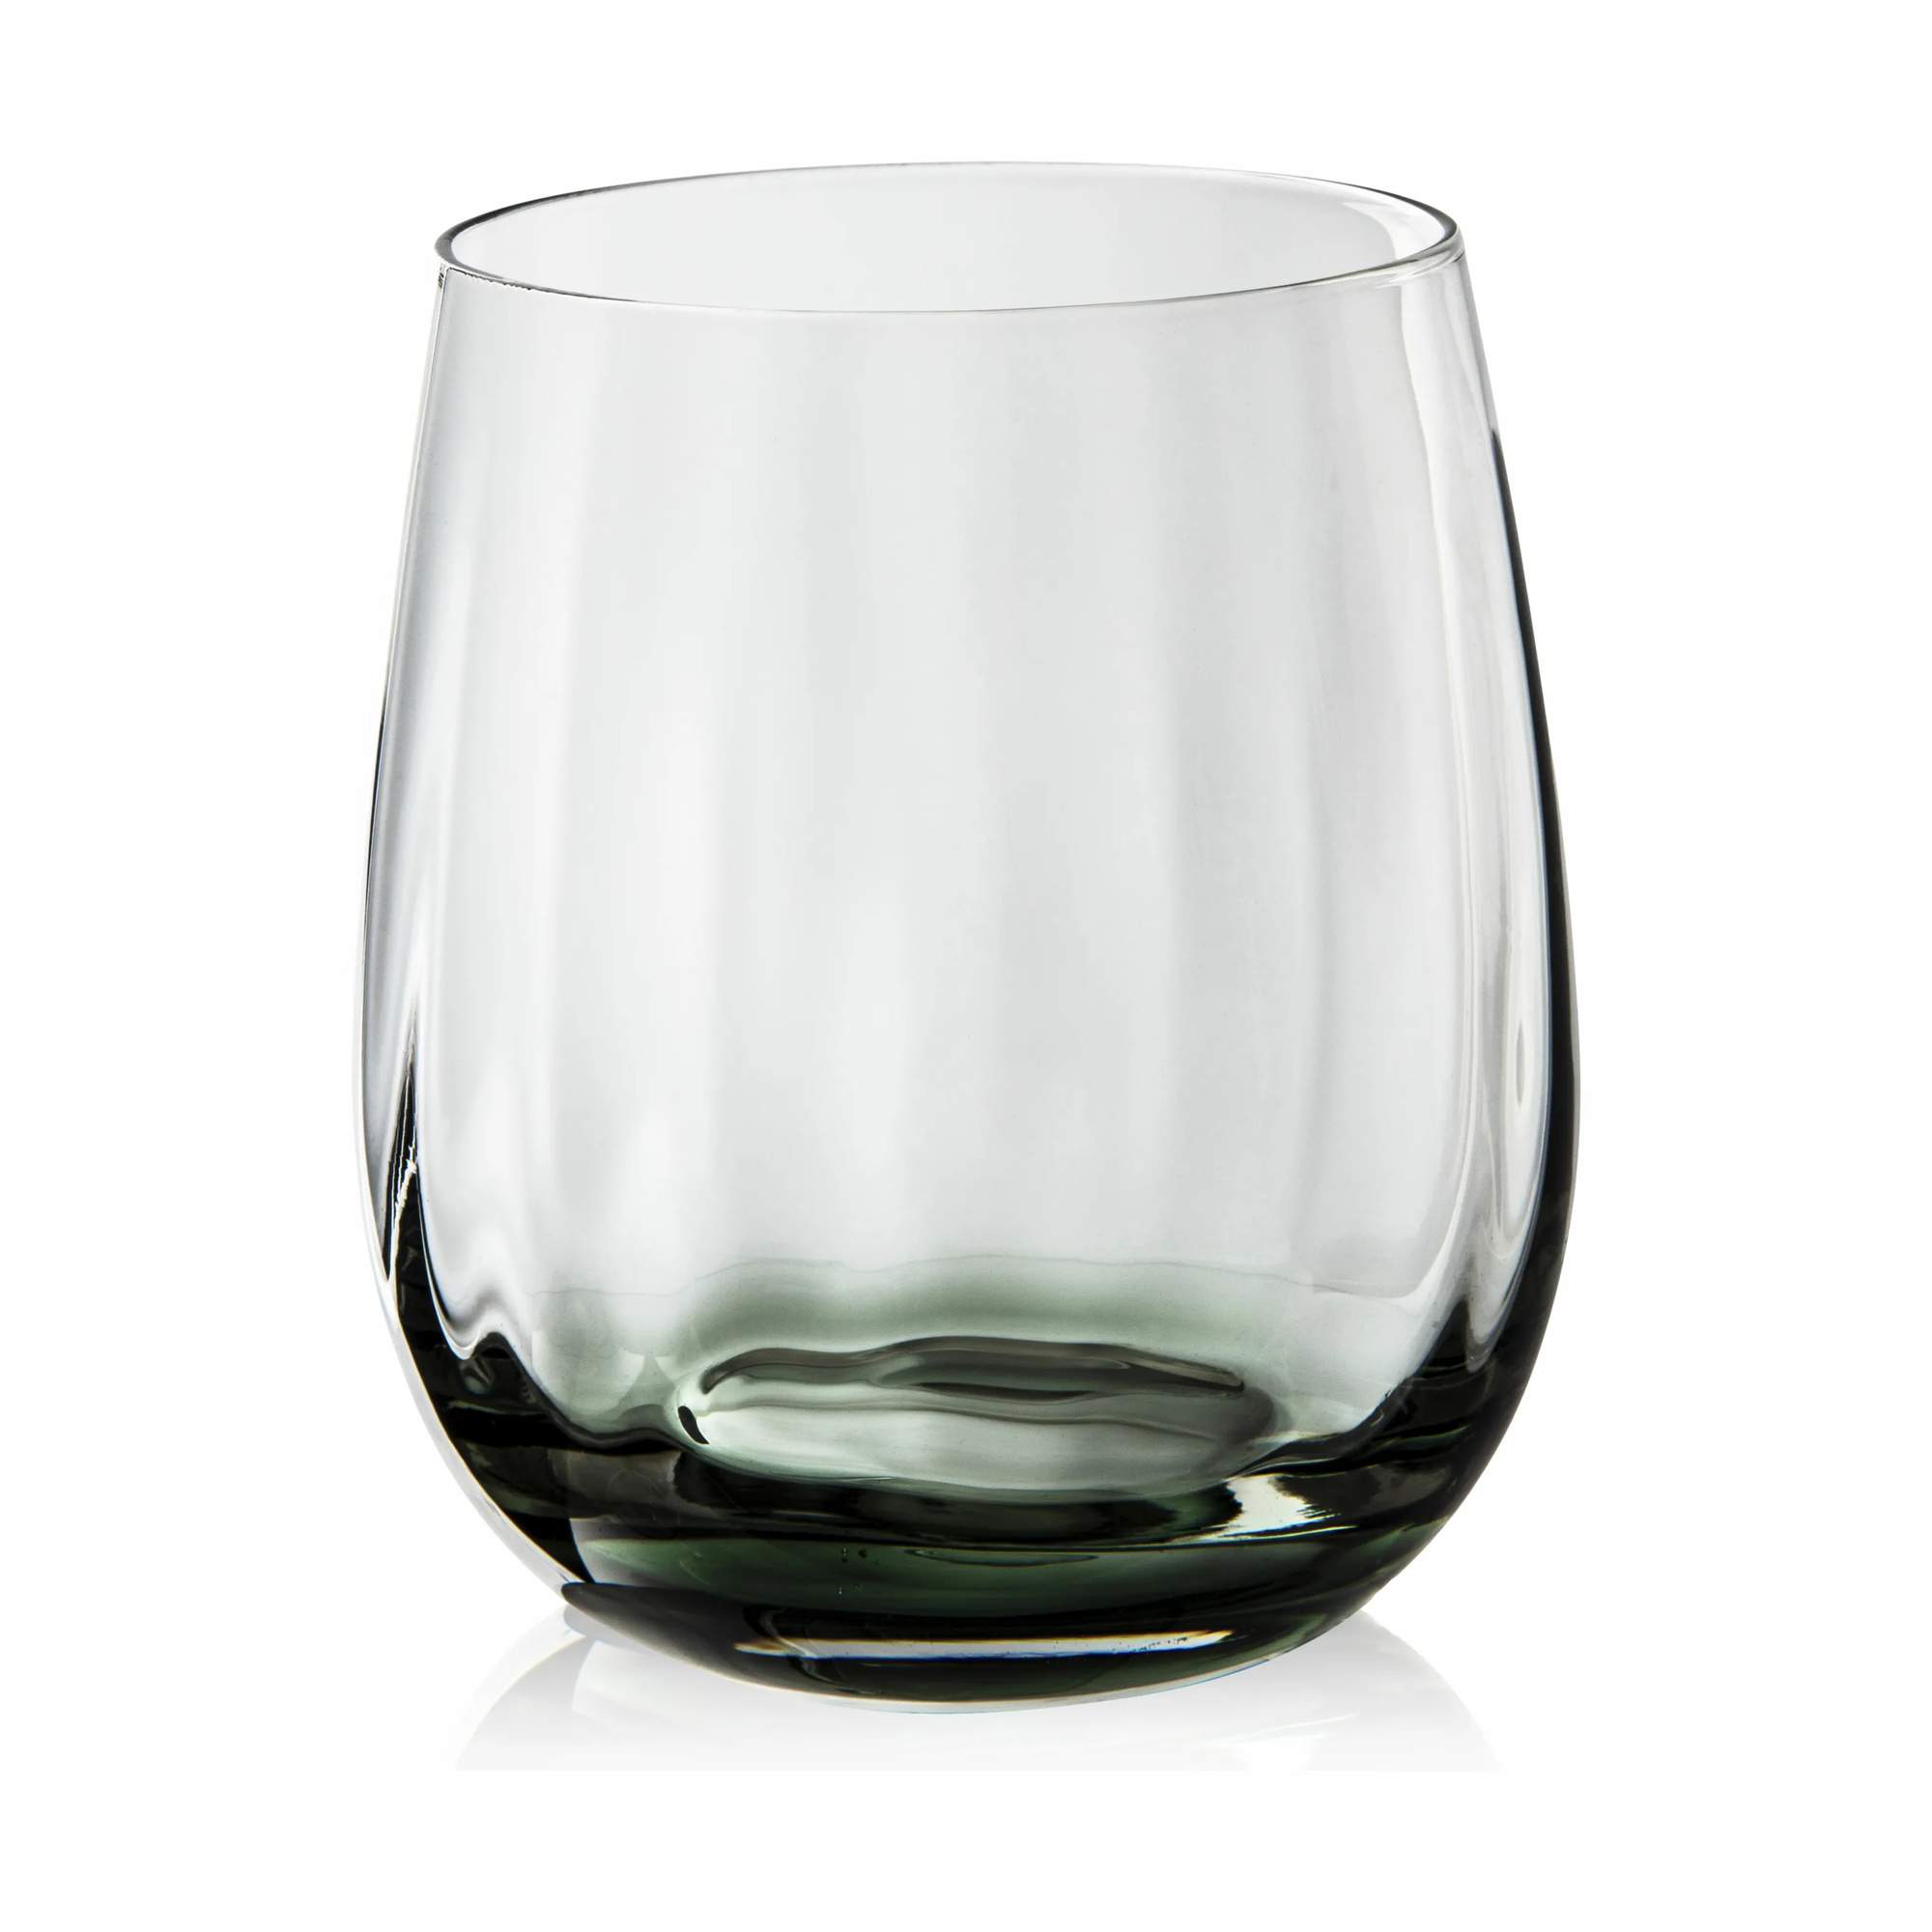 CASA Living Vandglas m. riller - 30 - Glas - Klar | Imerco